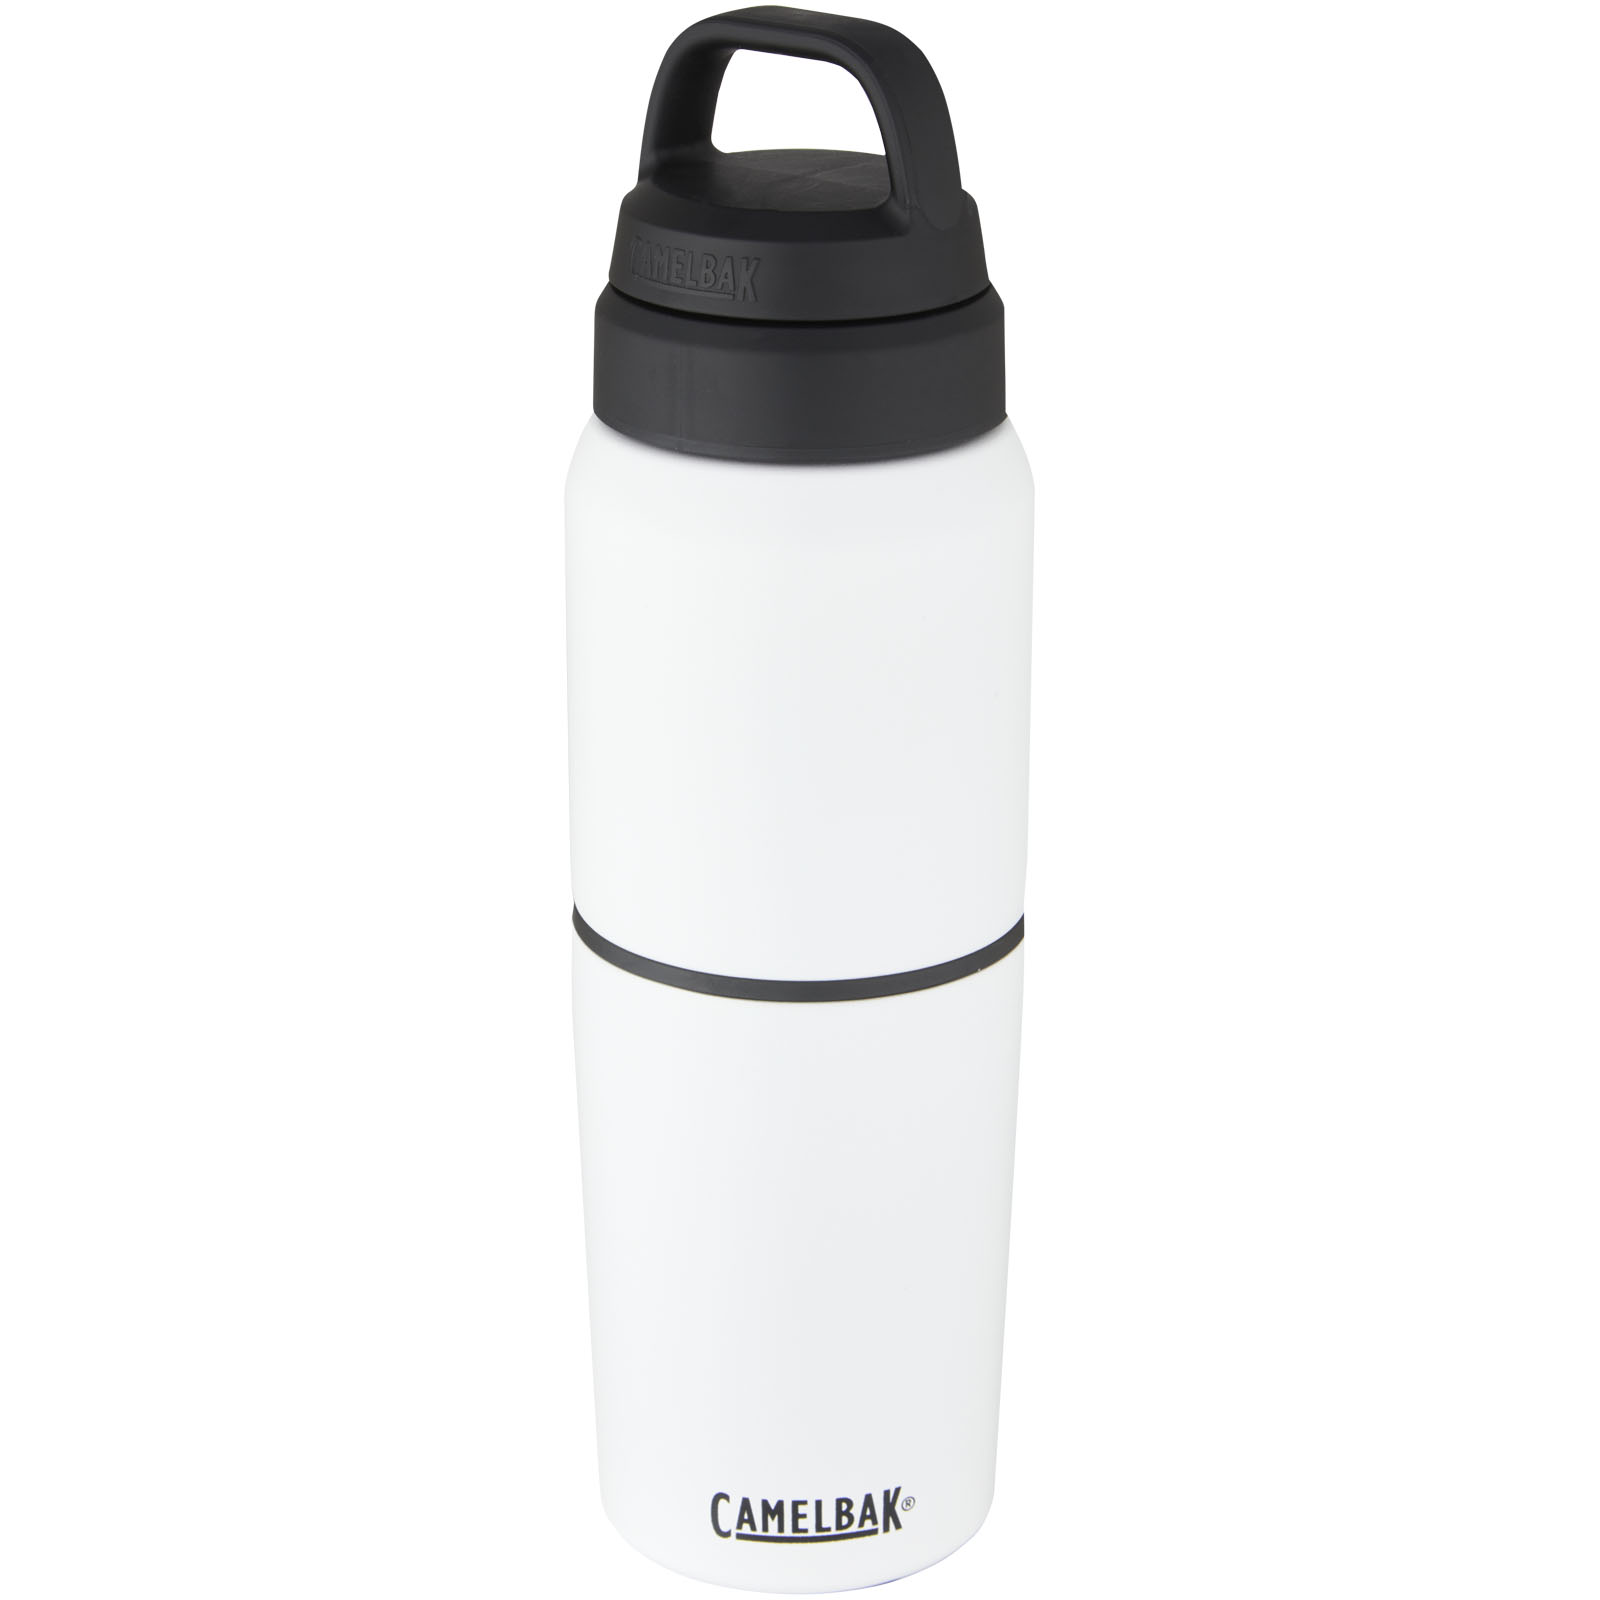 Advertising Water bottles - CamelBak® MultiBev vacuum insulated stainless steel 500 ml bottle and 350 ml cup - 4